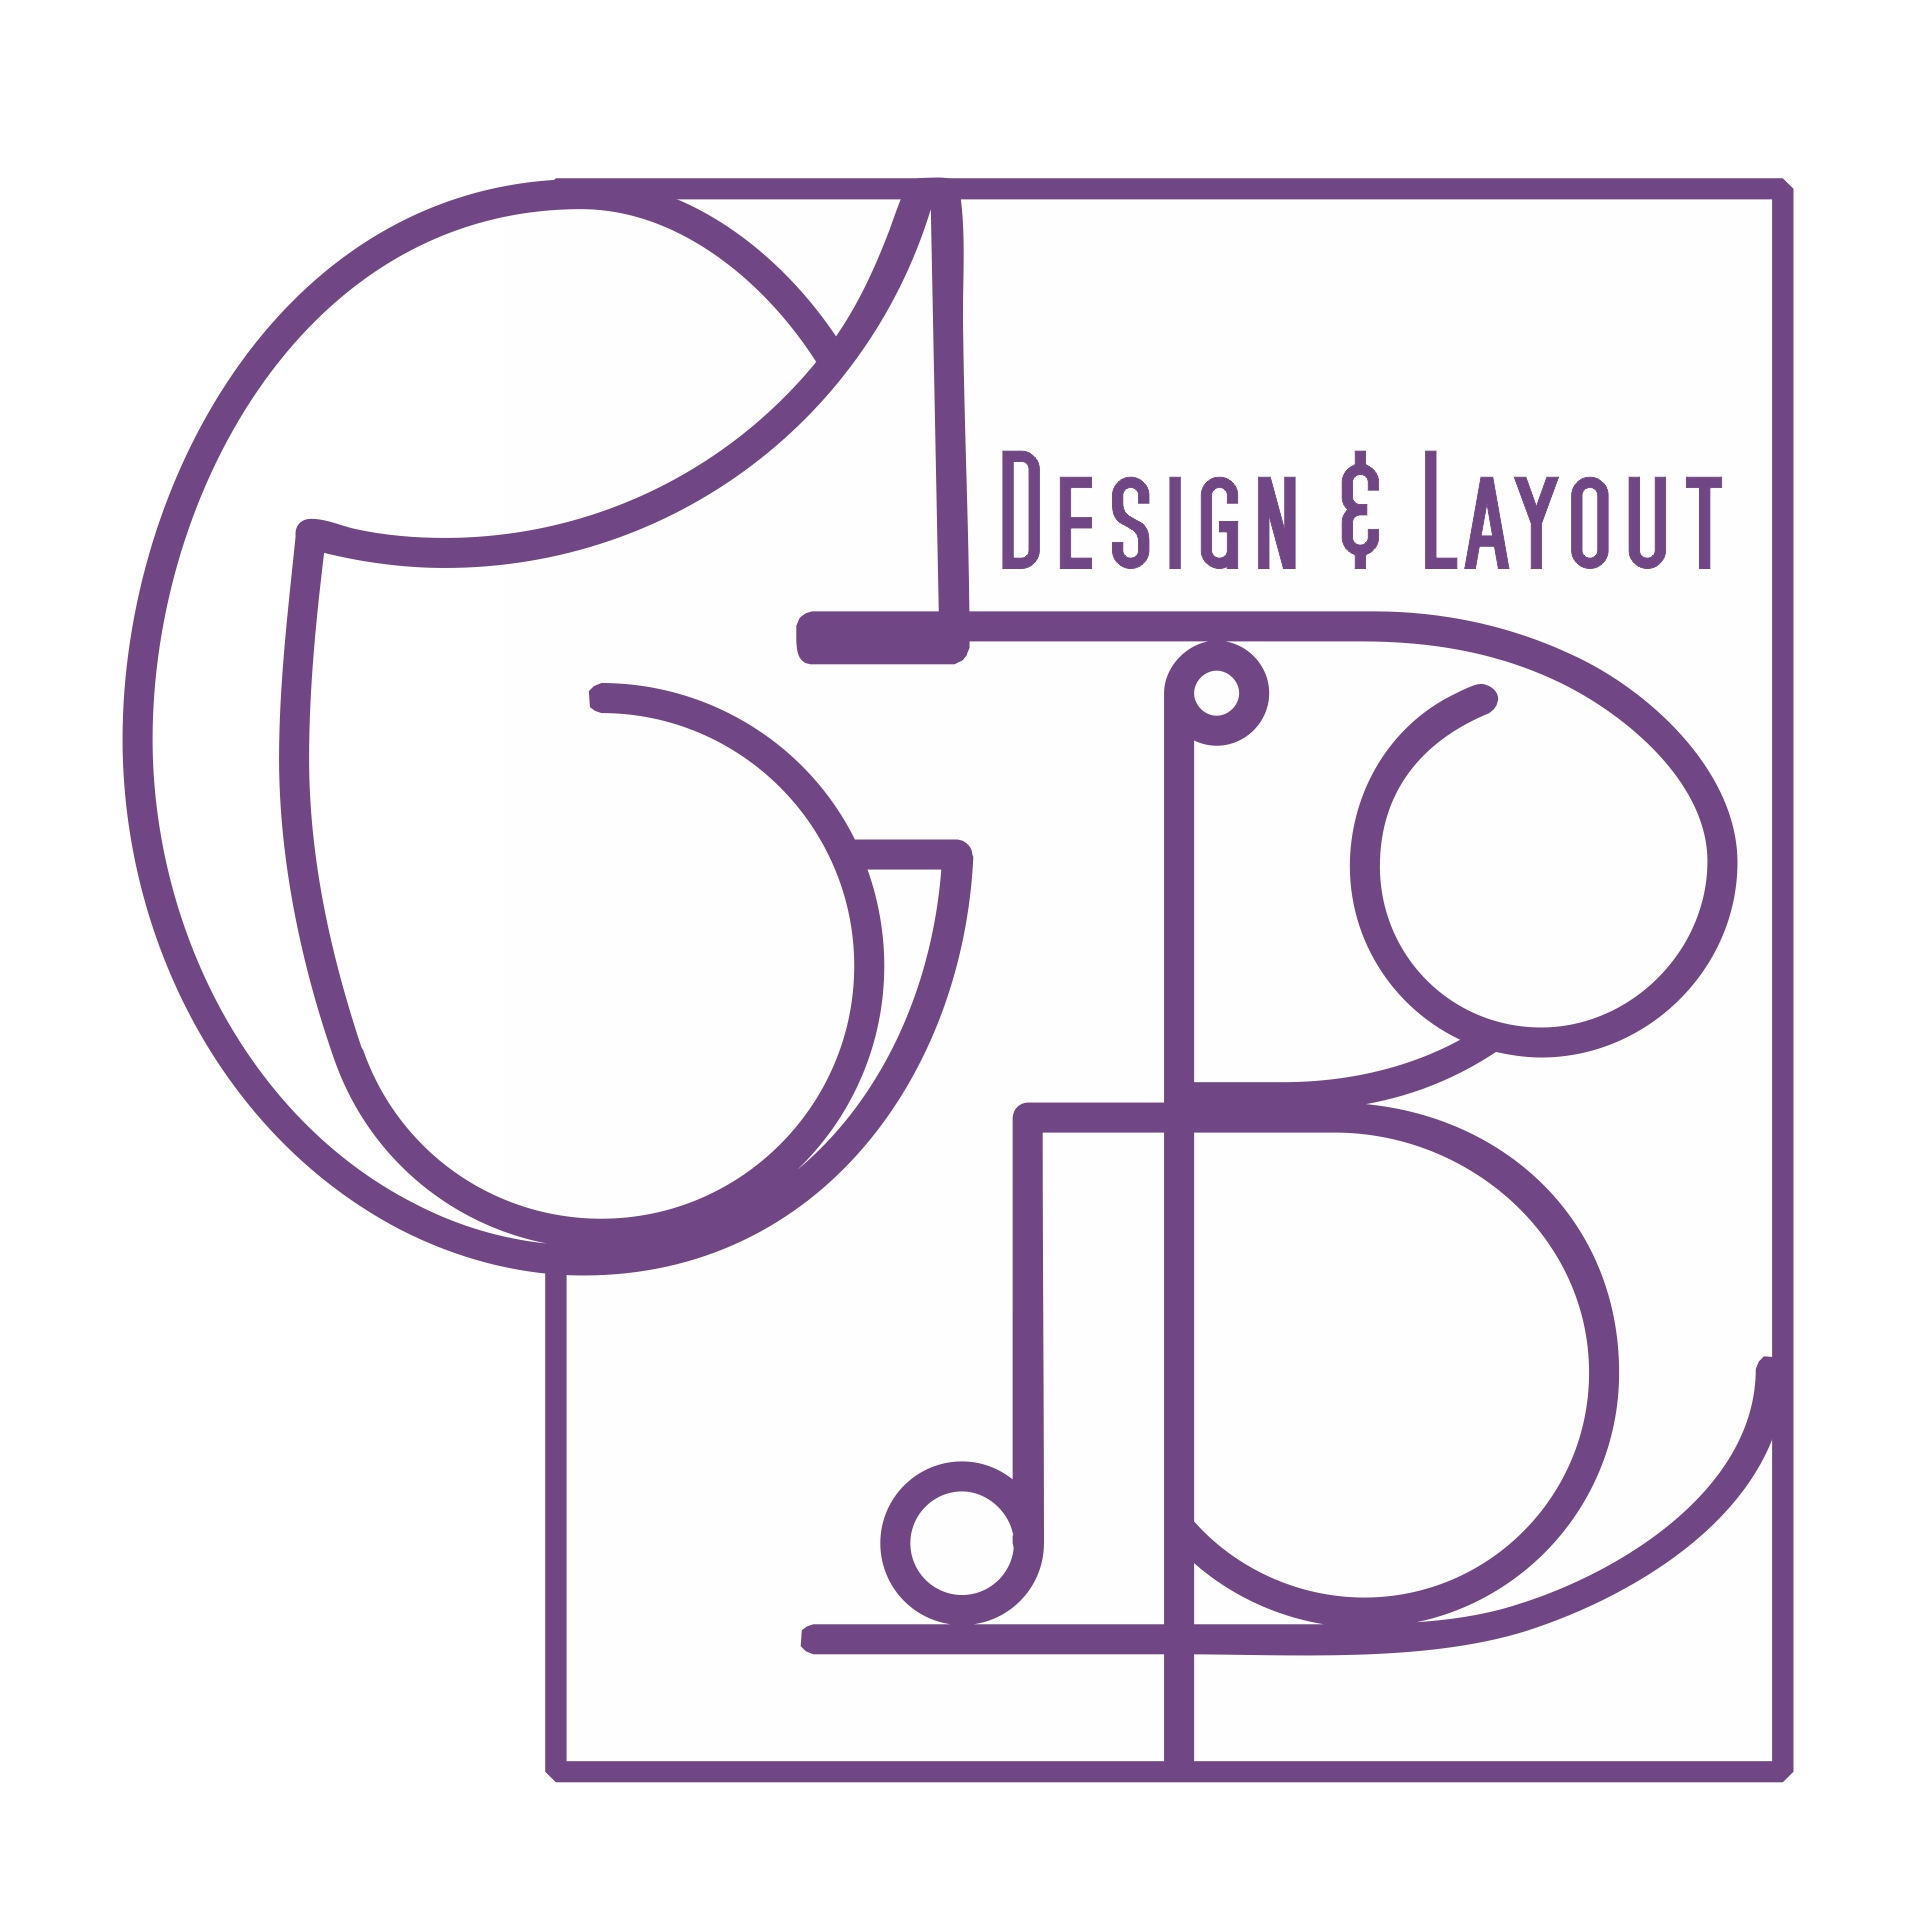 CB Design & Layout